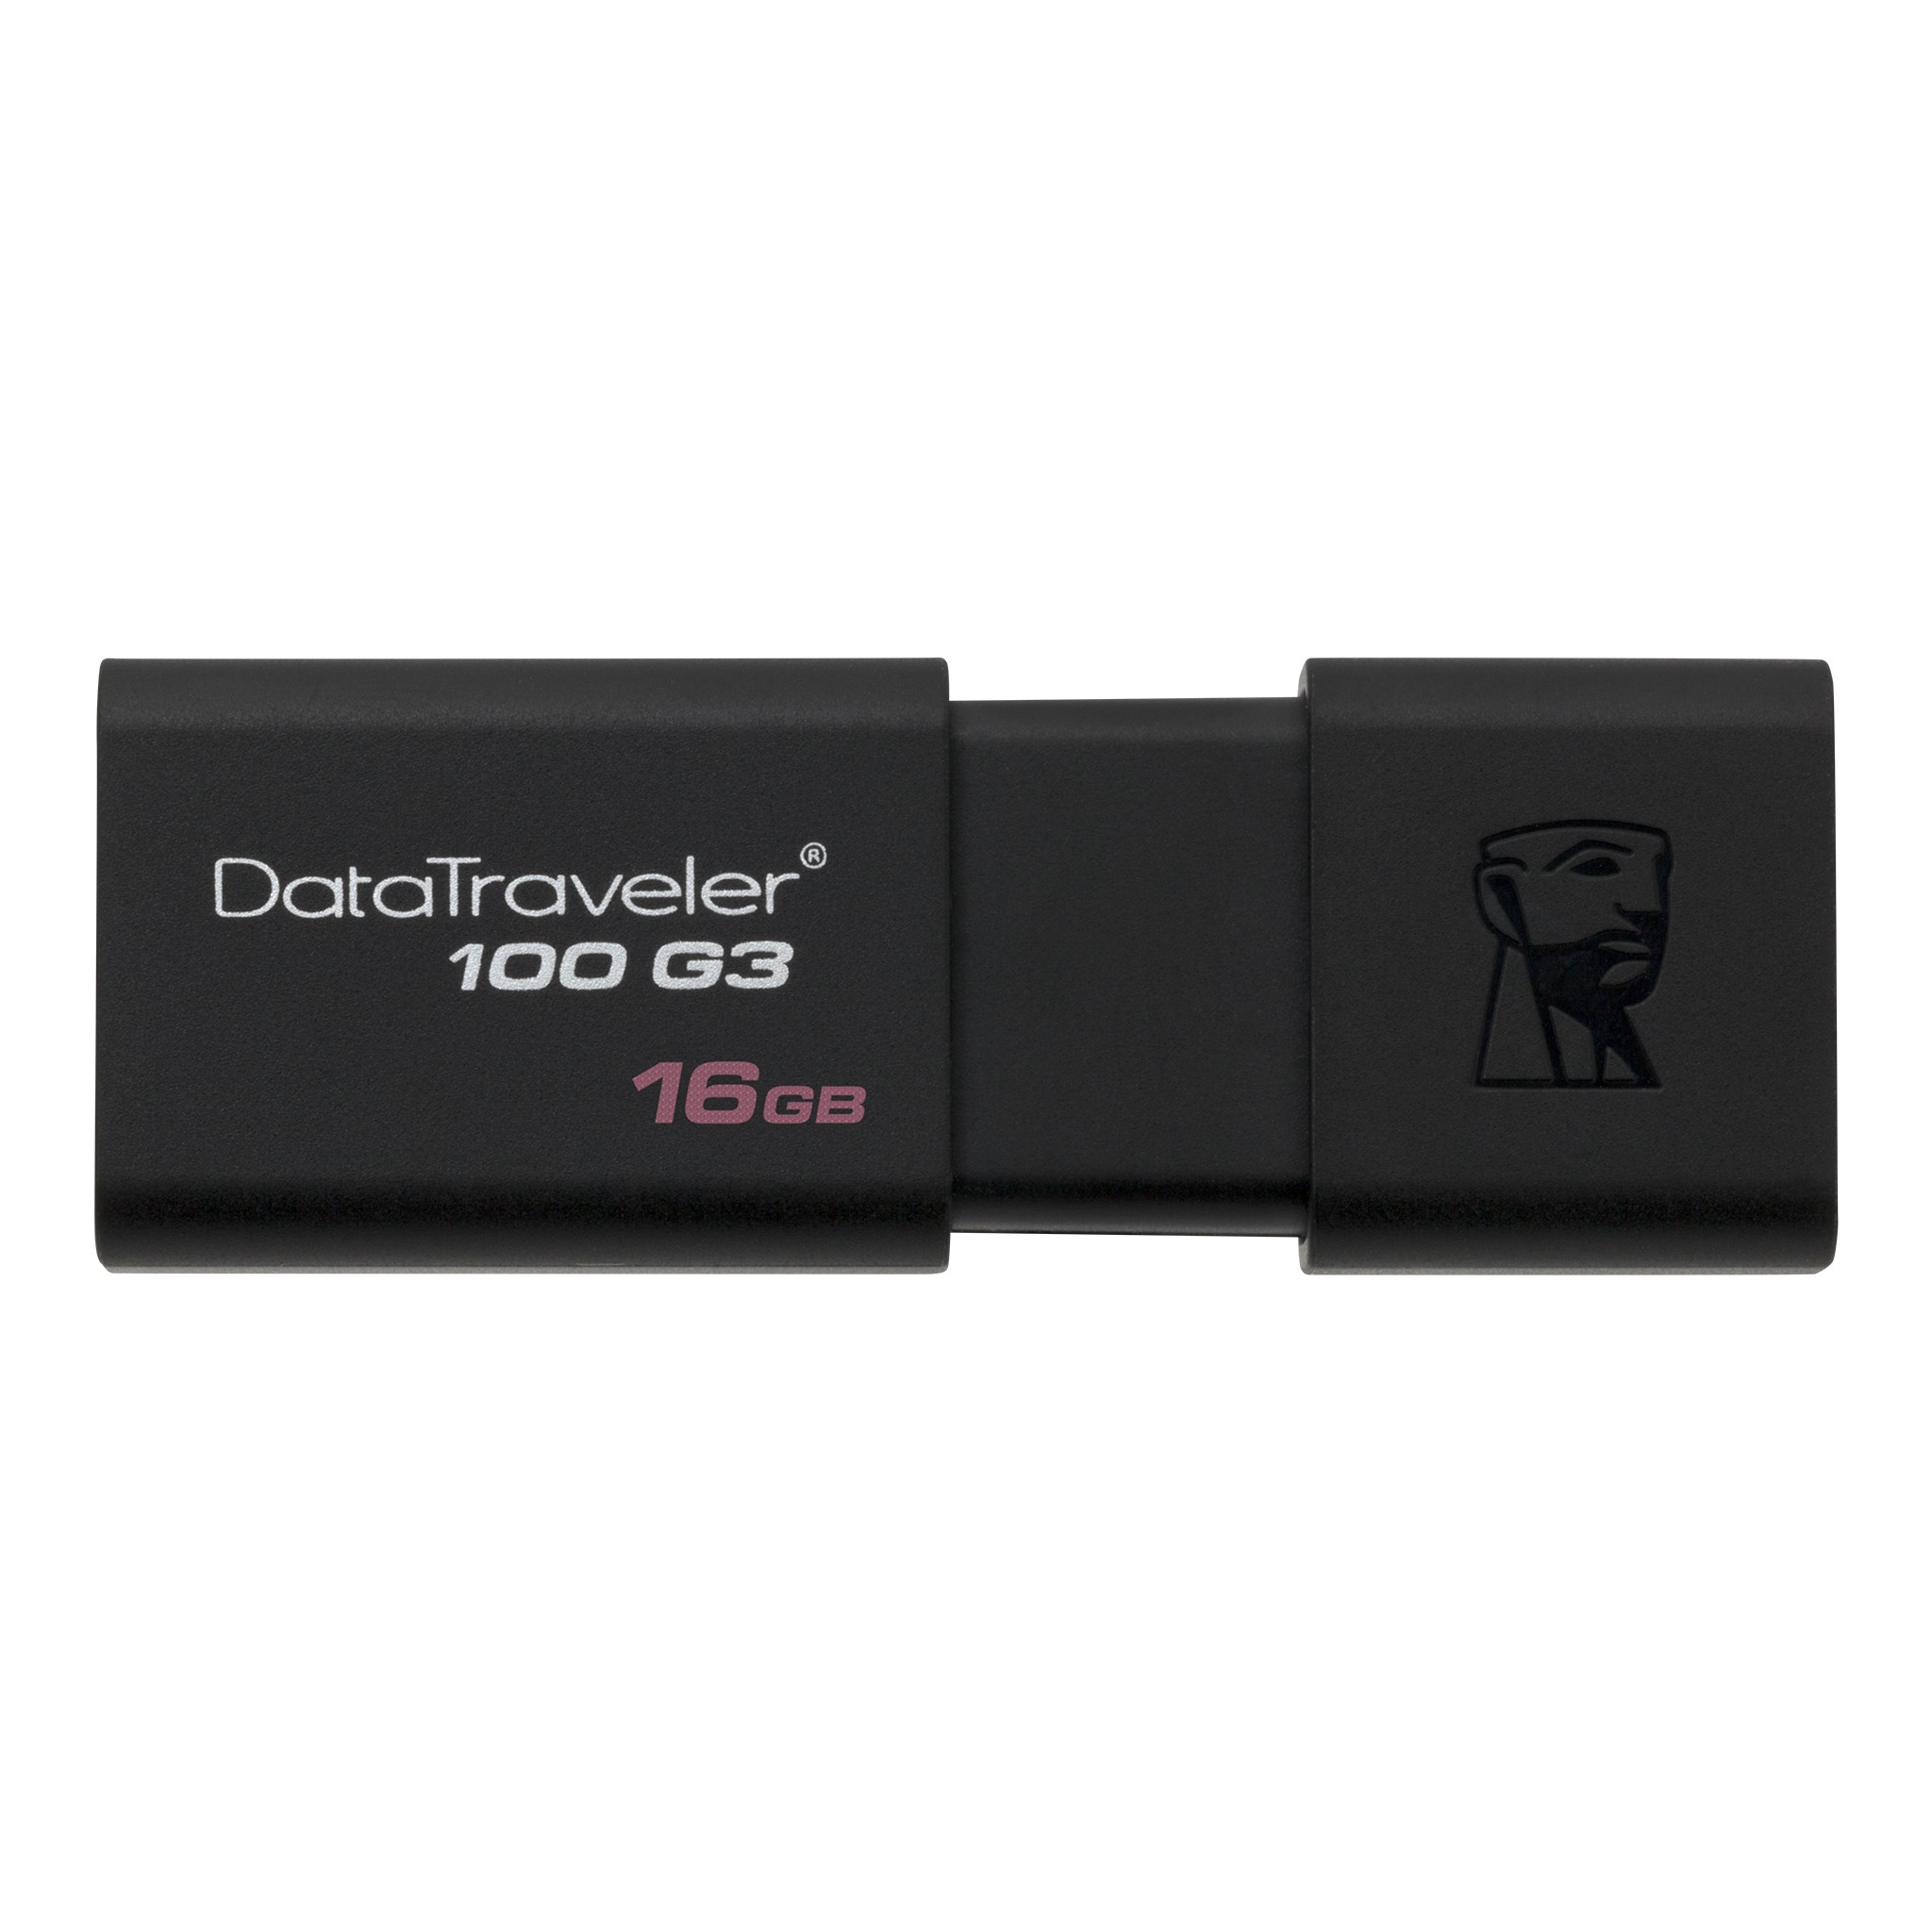 DataTraveler 100 G3 USB Drive - 16GB-128GB | Kingston